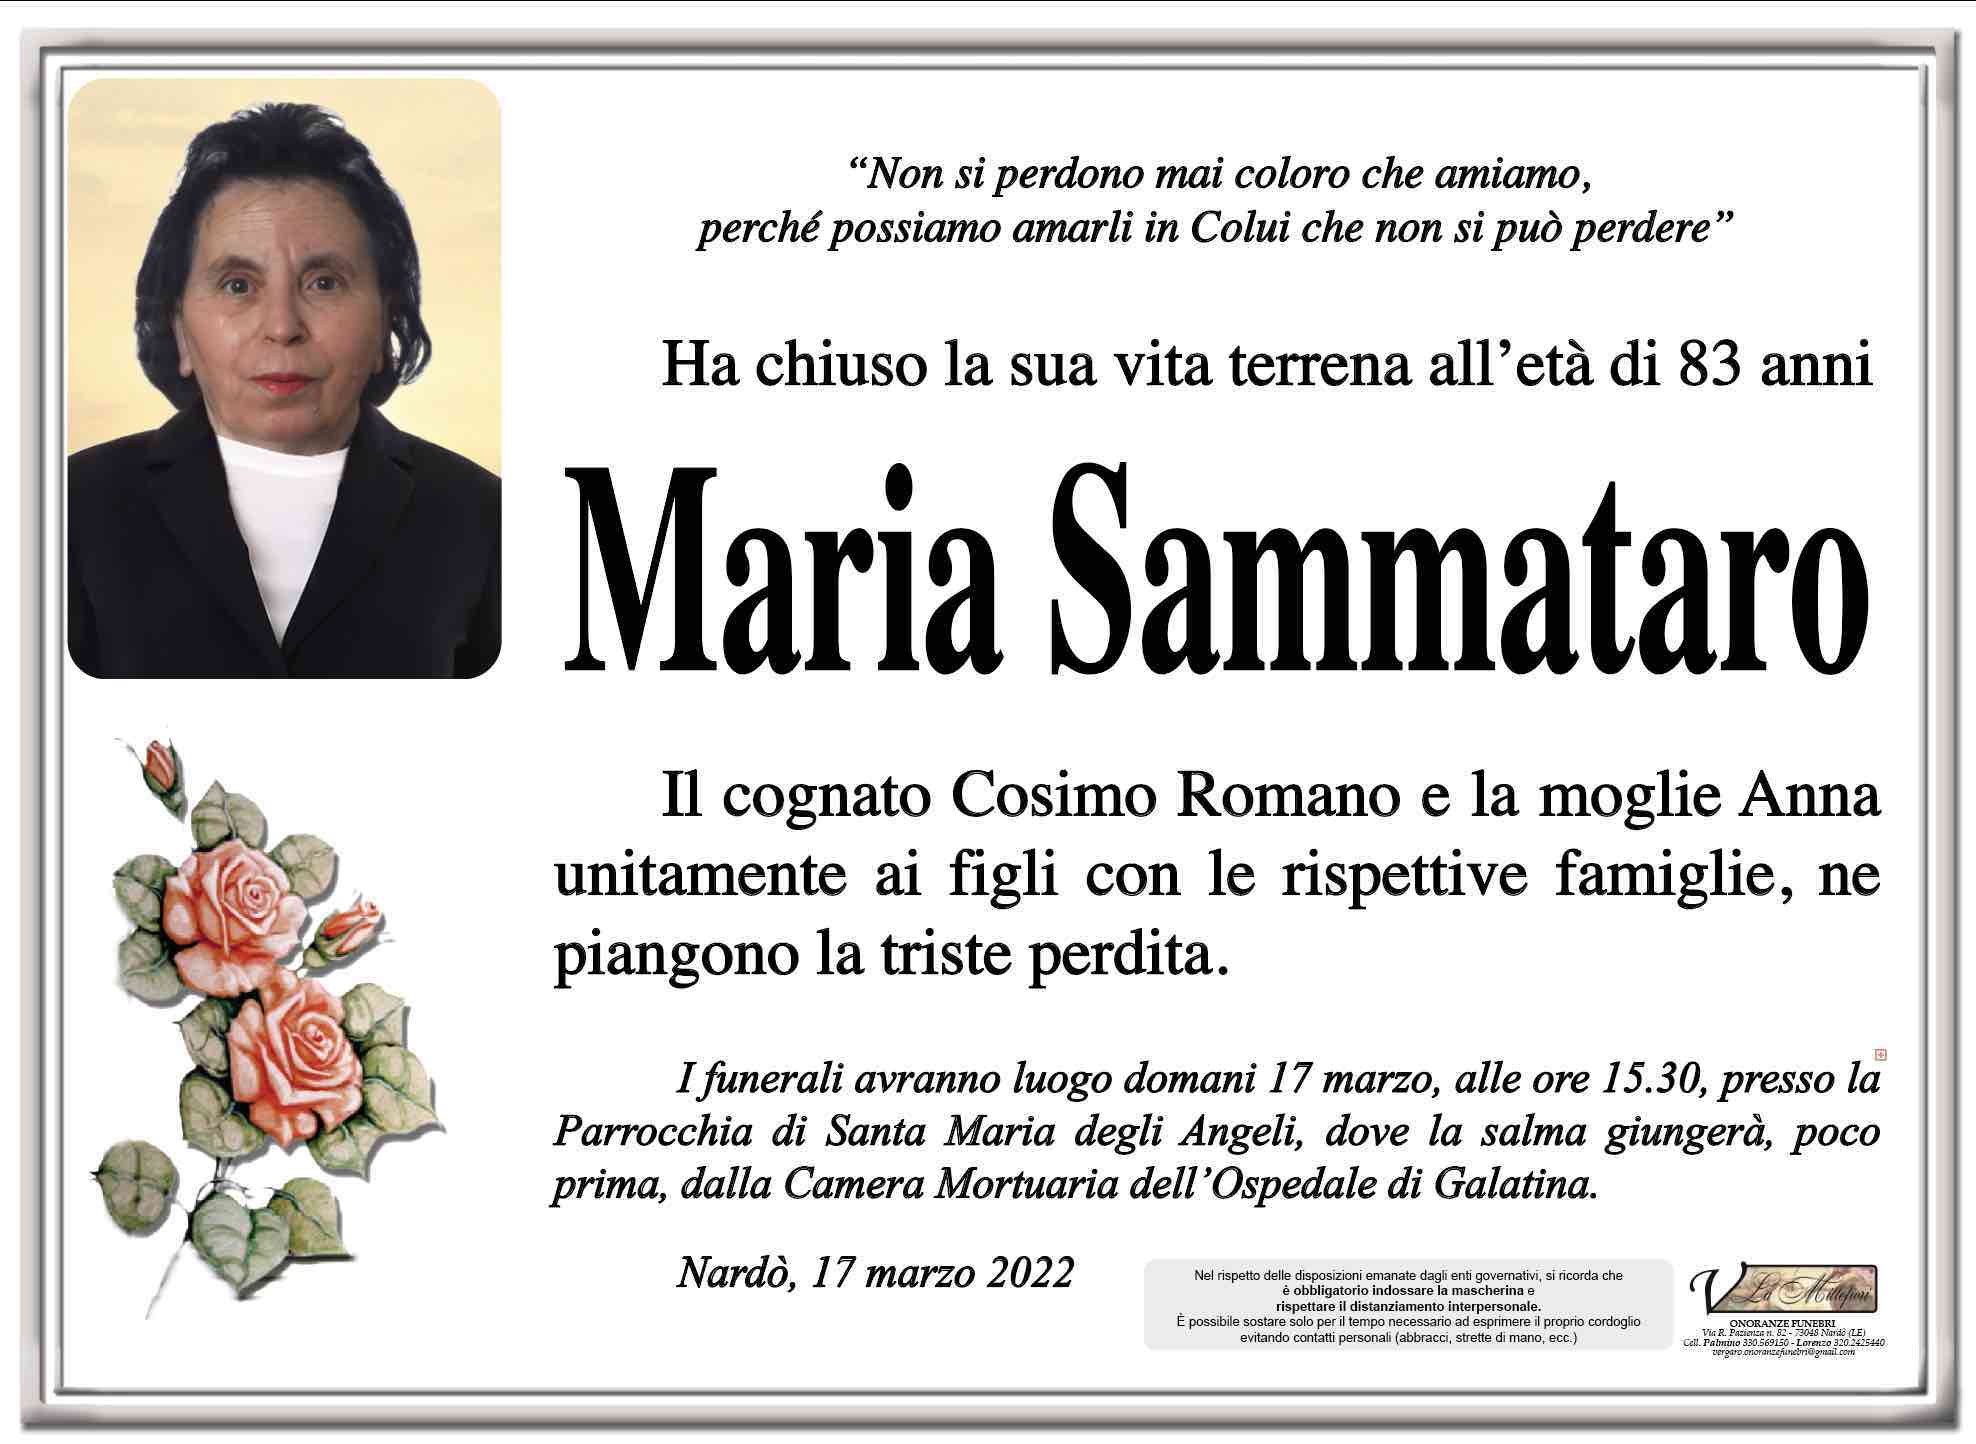 Maria Sammataro